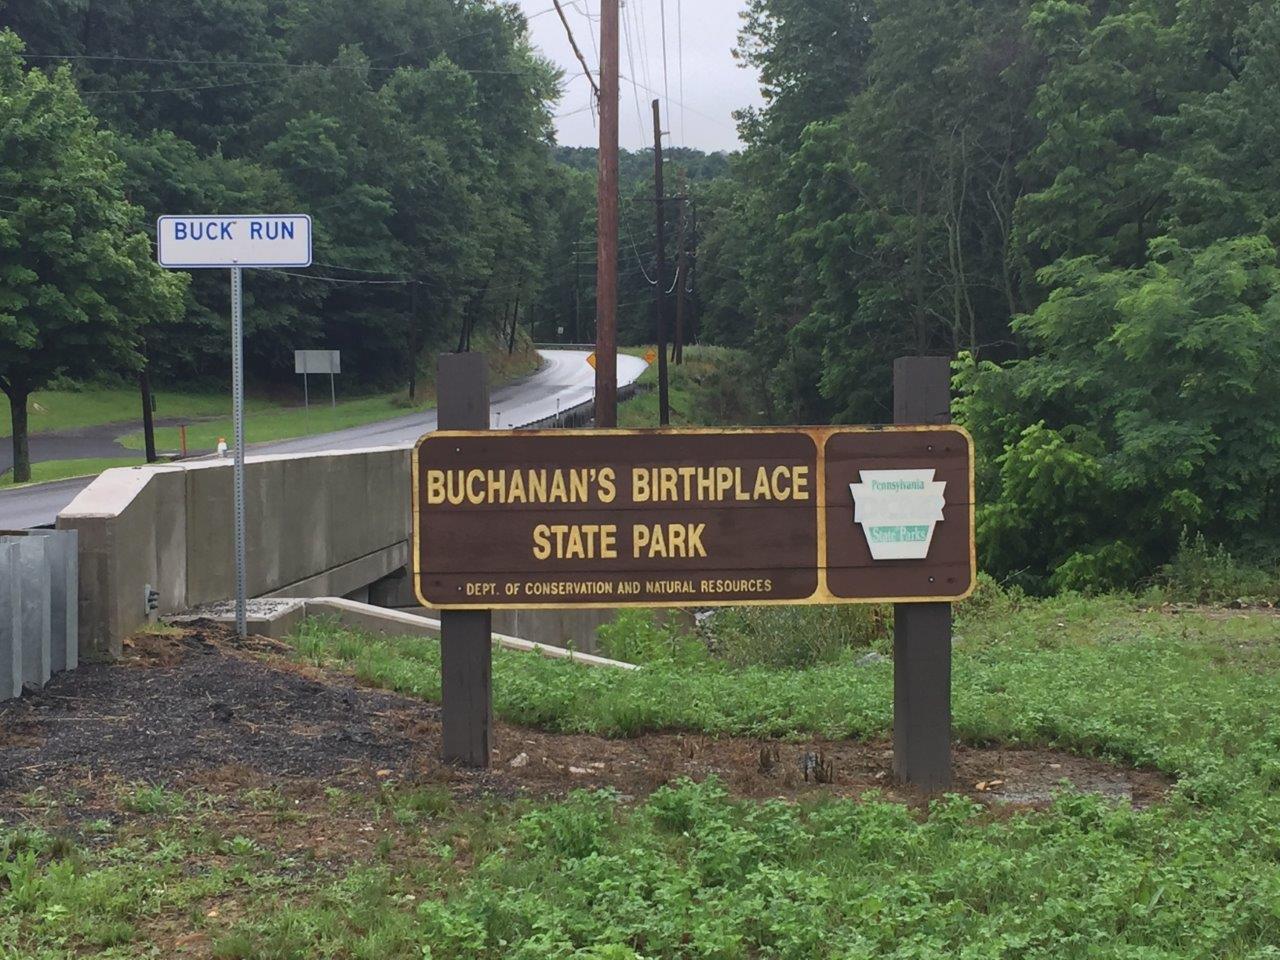 Buchanan's birthplace state park